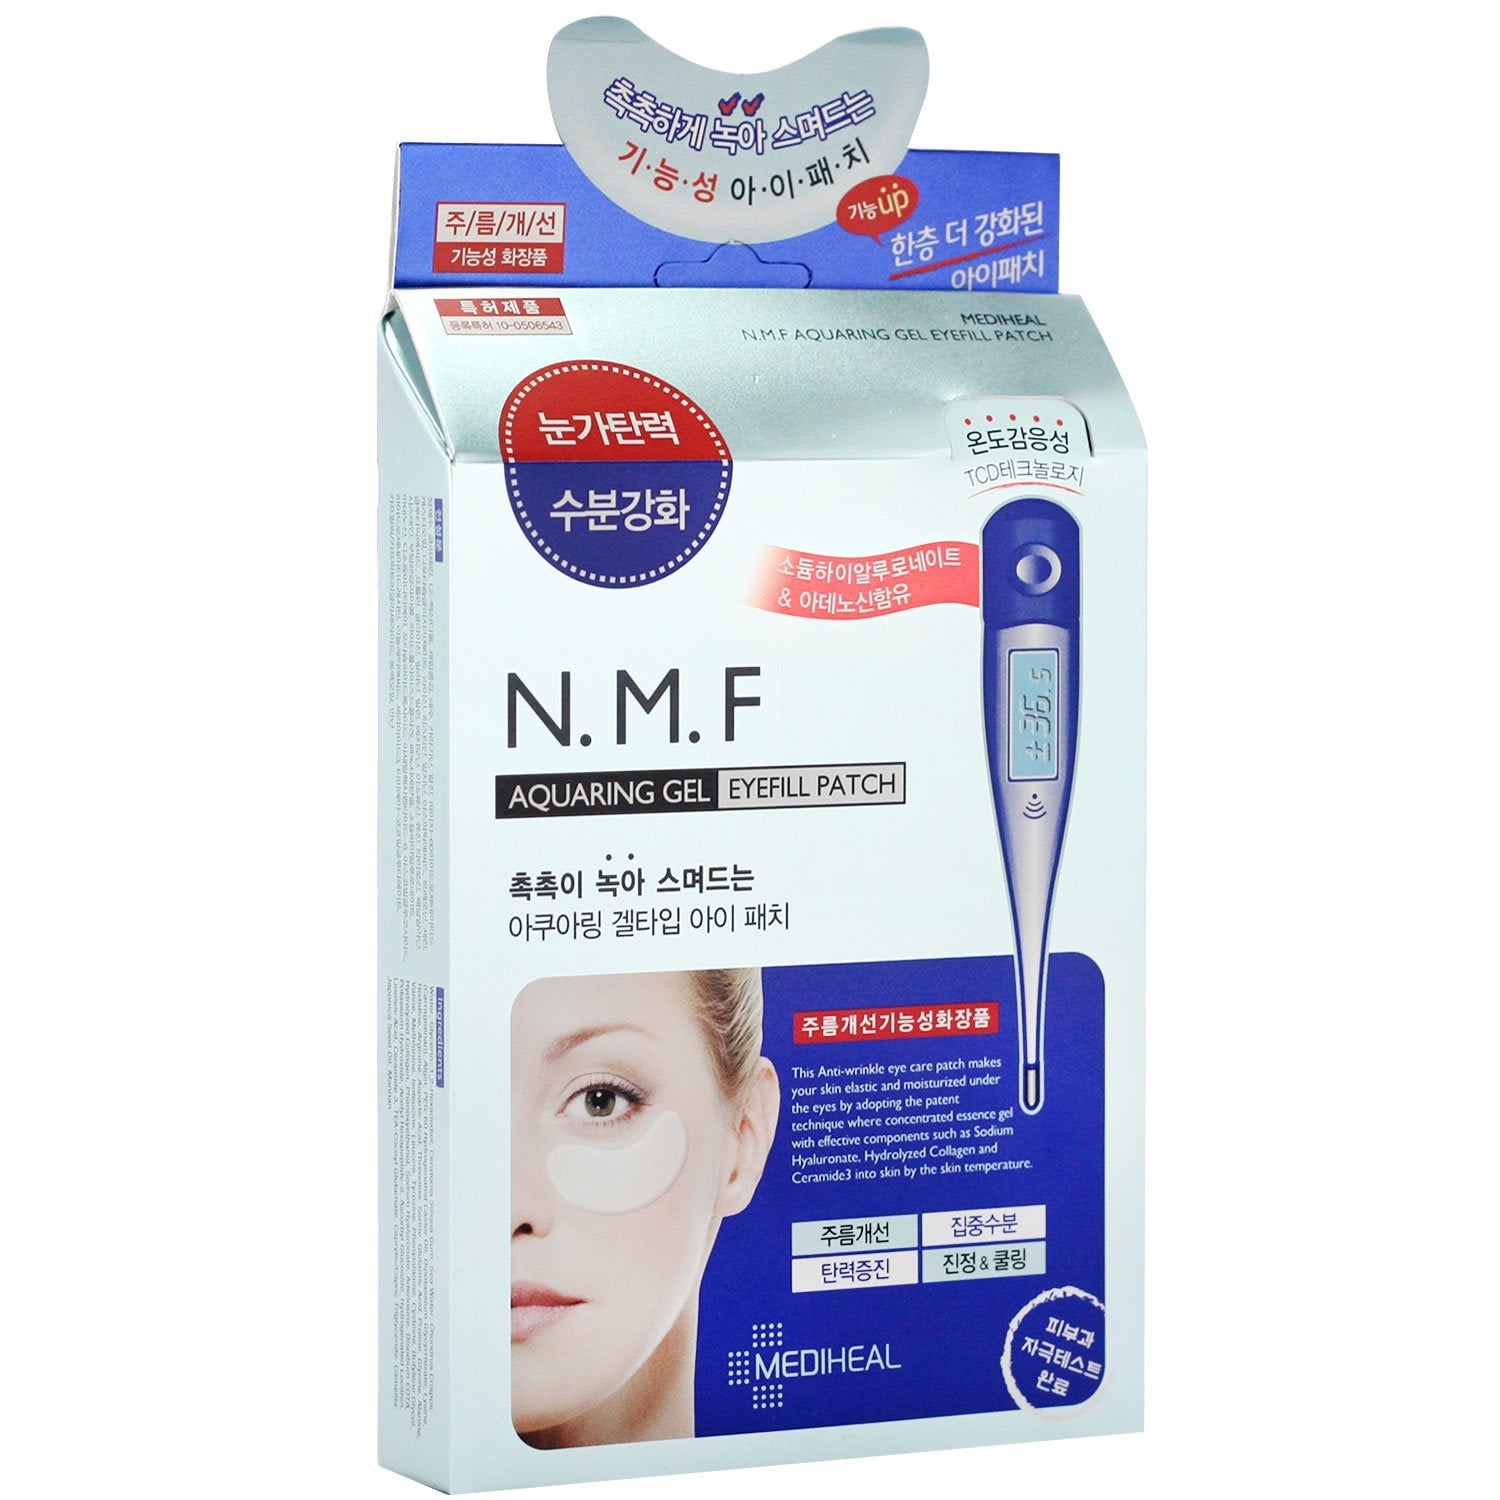 Mediheal N.M.F Aquaring Gel Eyefill Patches 5 Sheets Pads